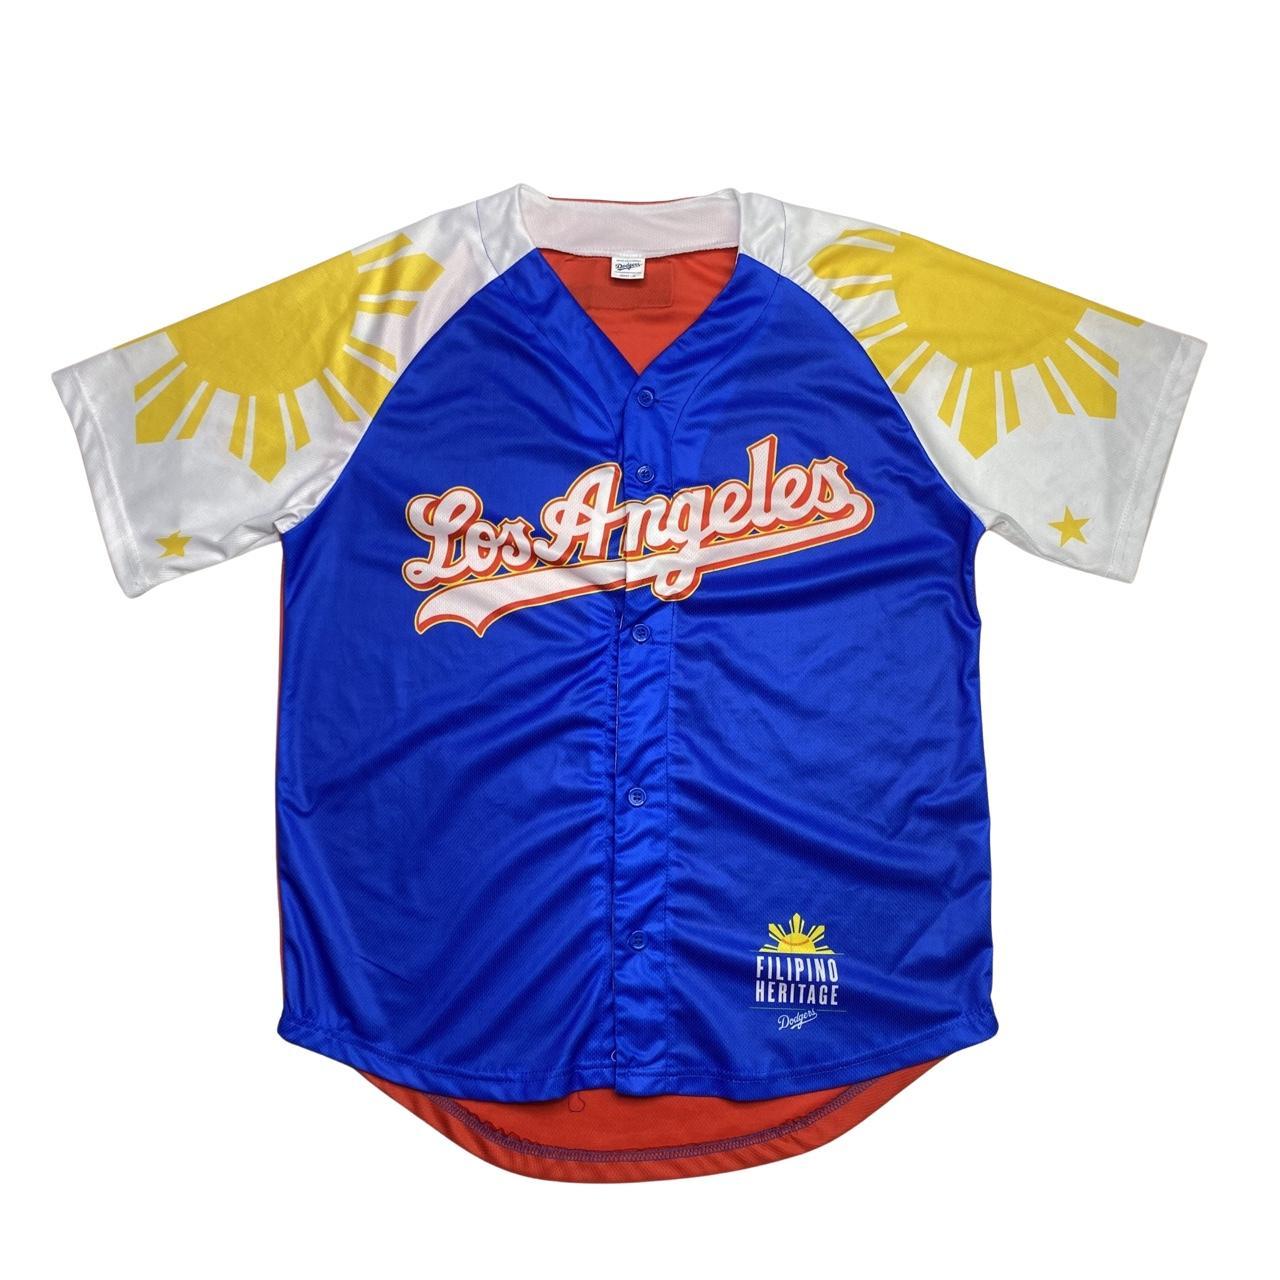 2022 Los Angeles Dodgers Filipino Heritage Night - Depop